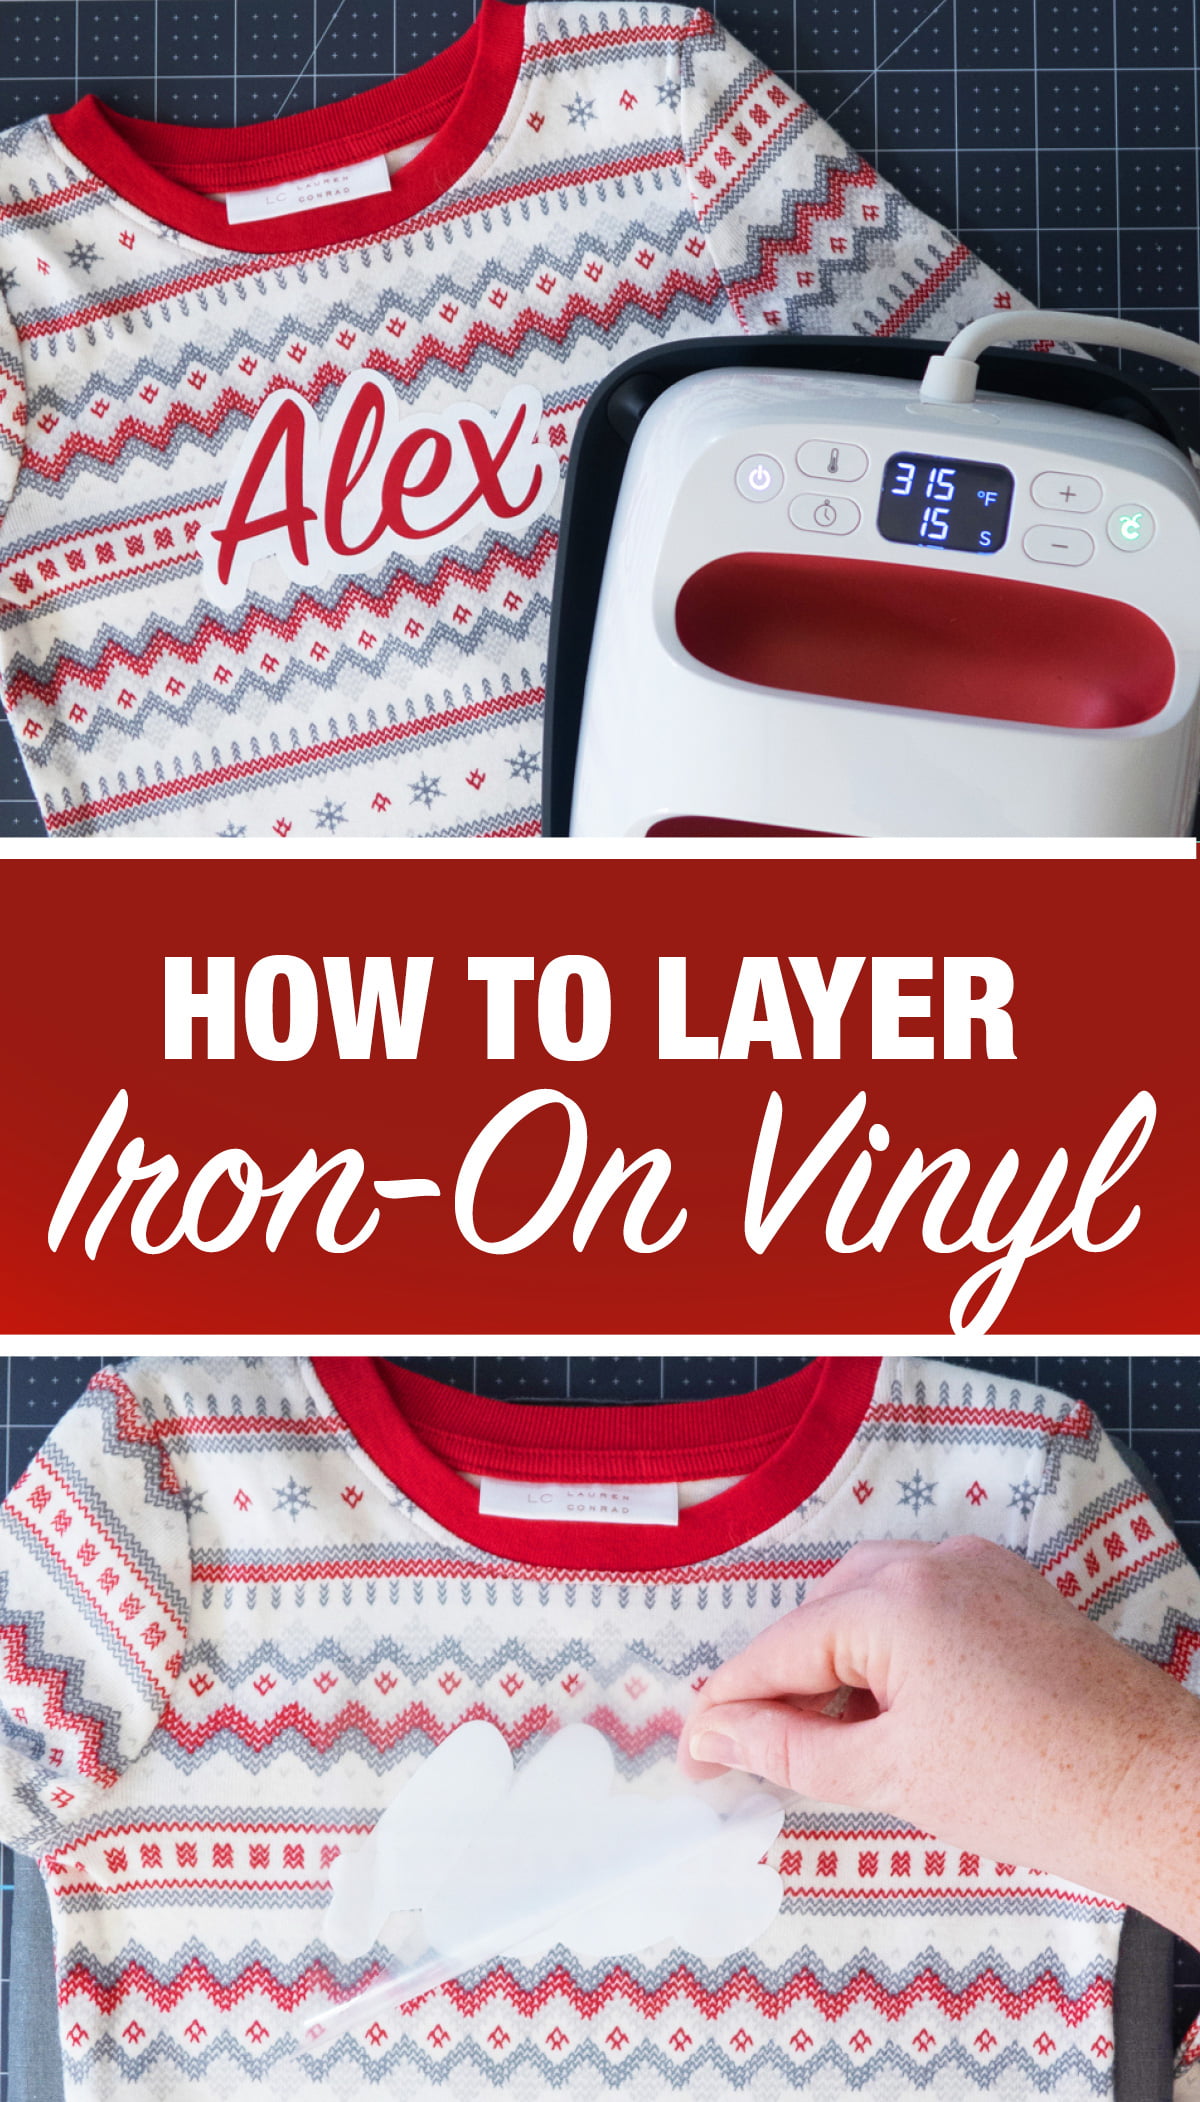 How To Layer Iron On Vinyl